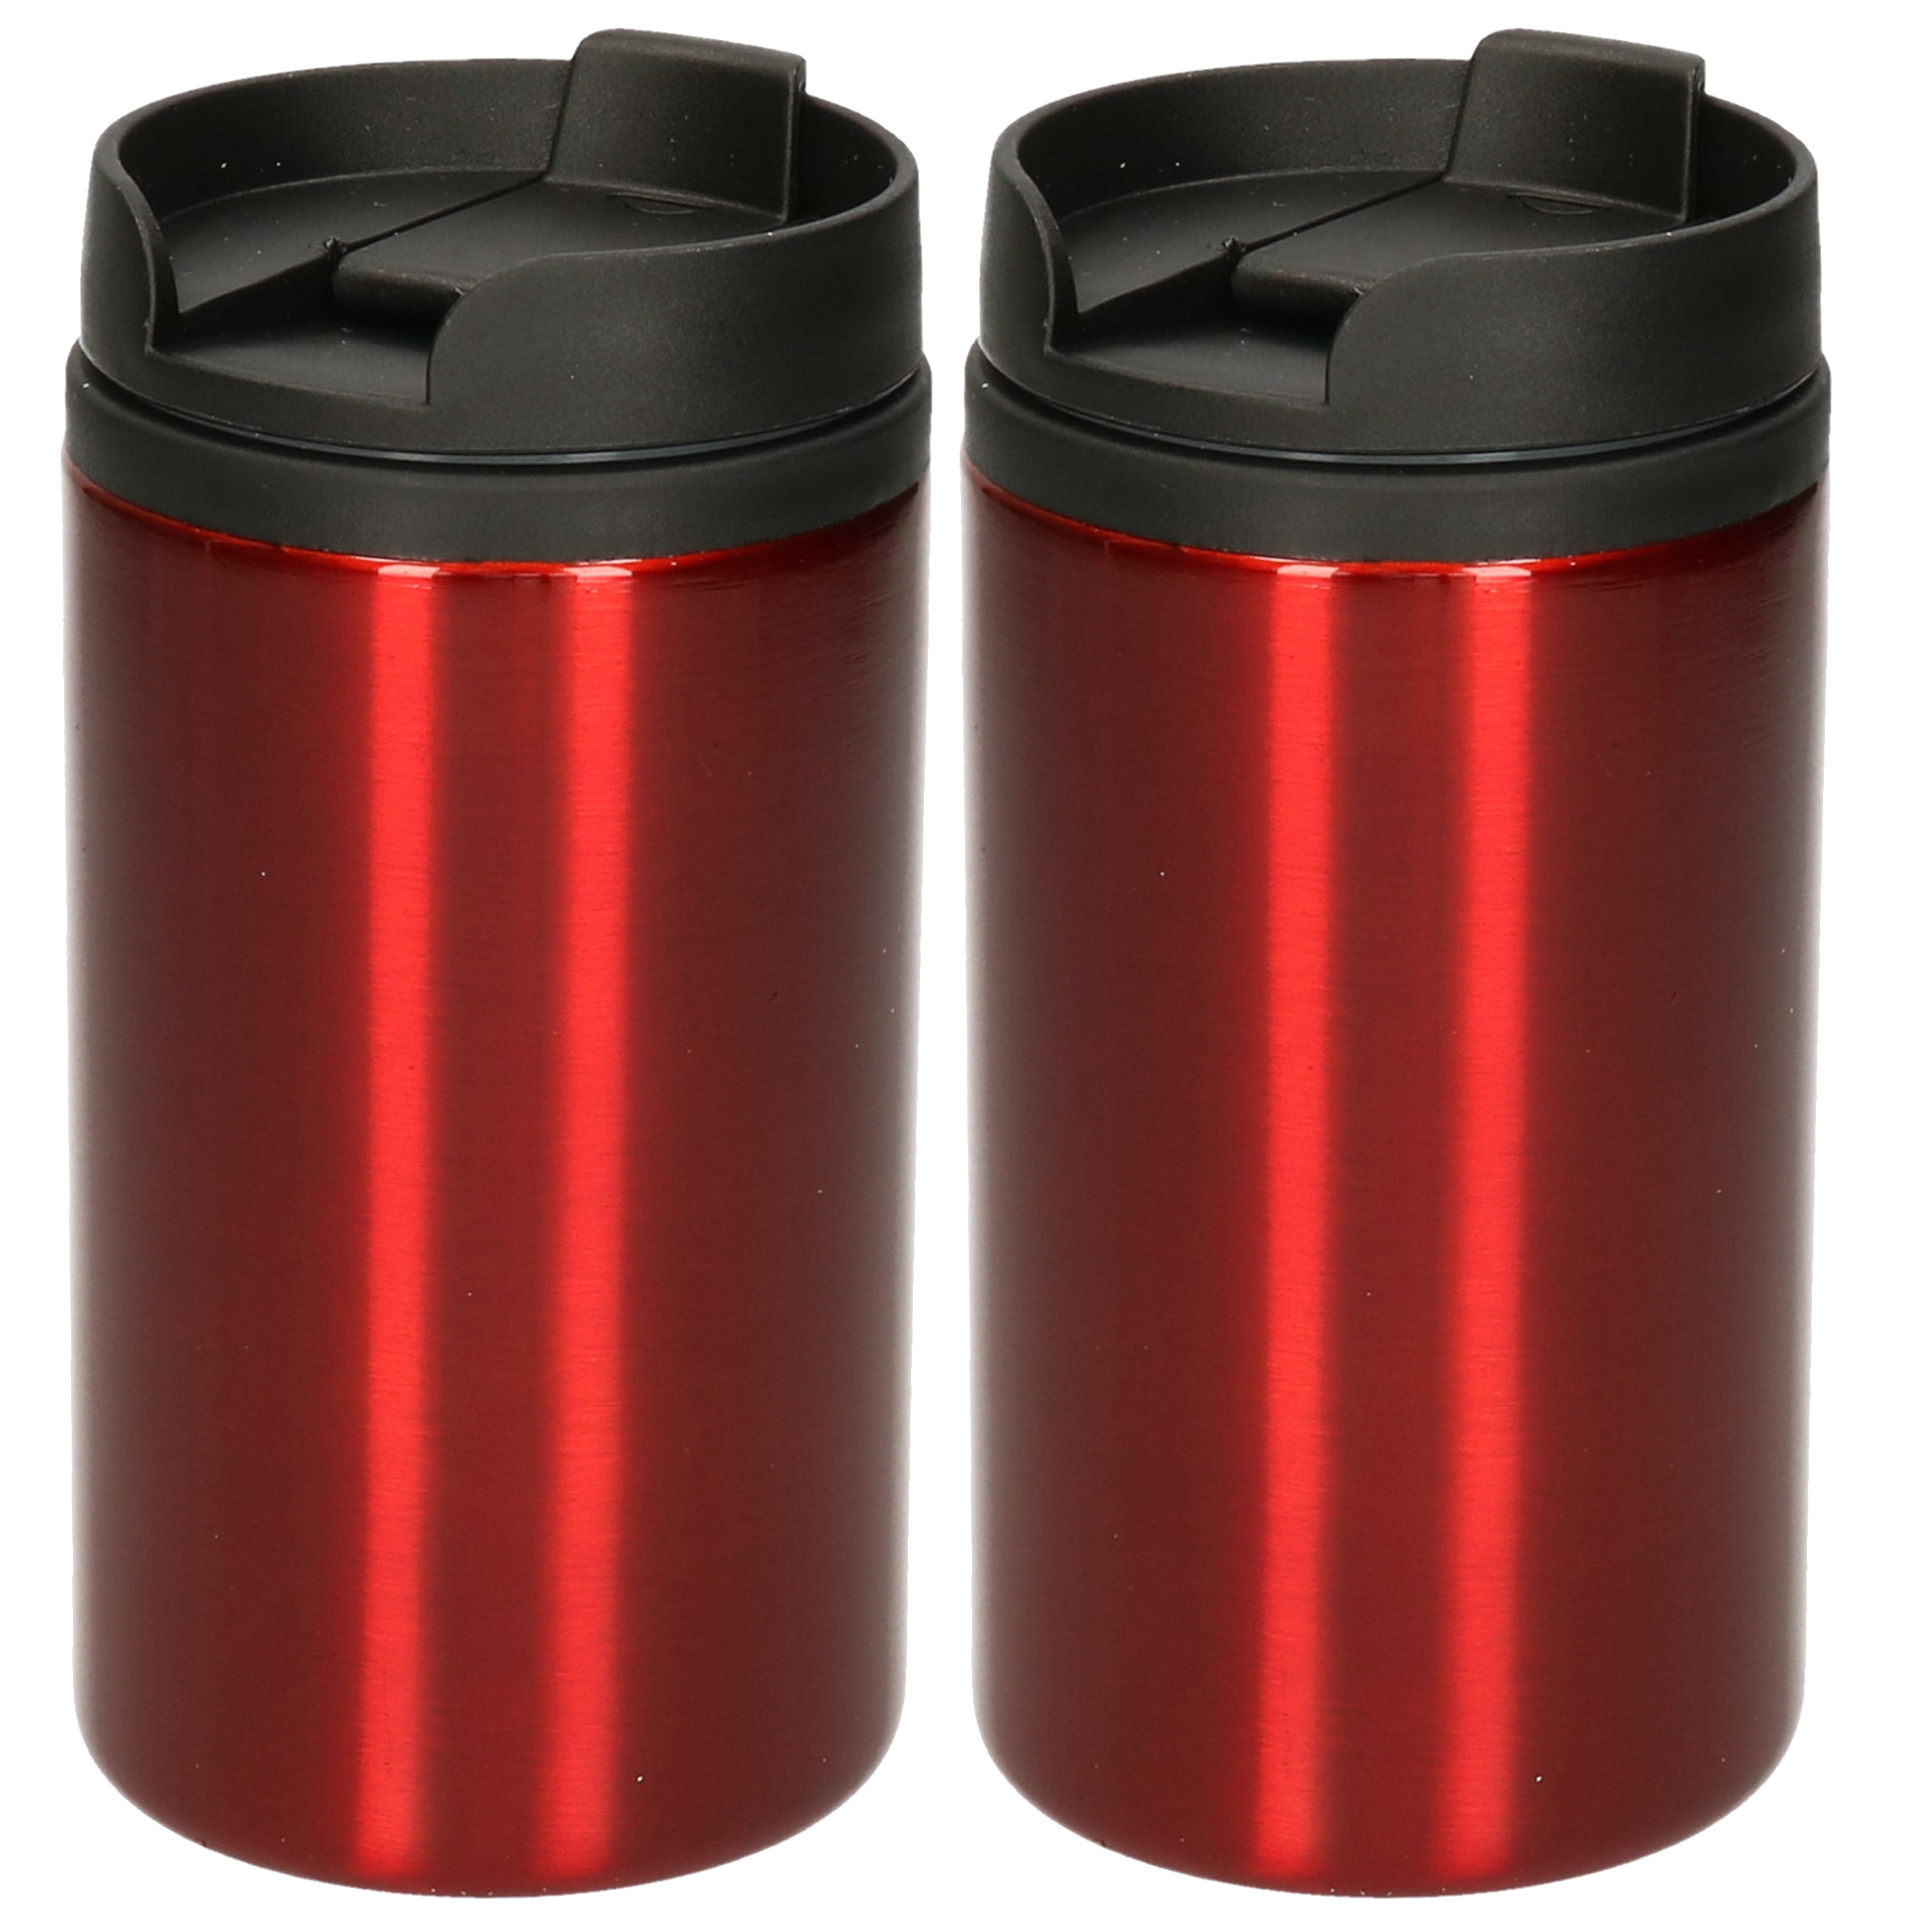 2x Isoleerbekers RVS metallic rood 320 ml